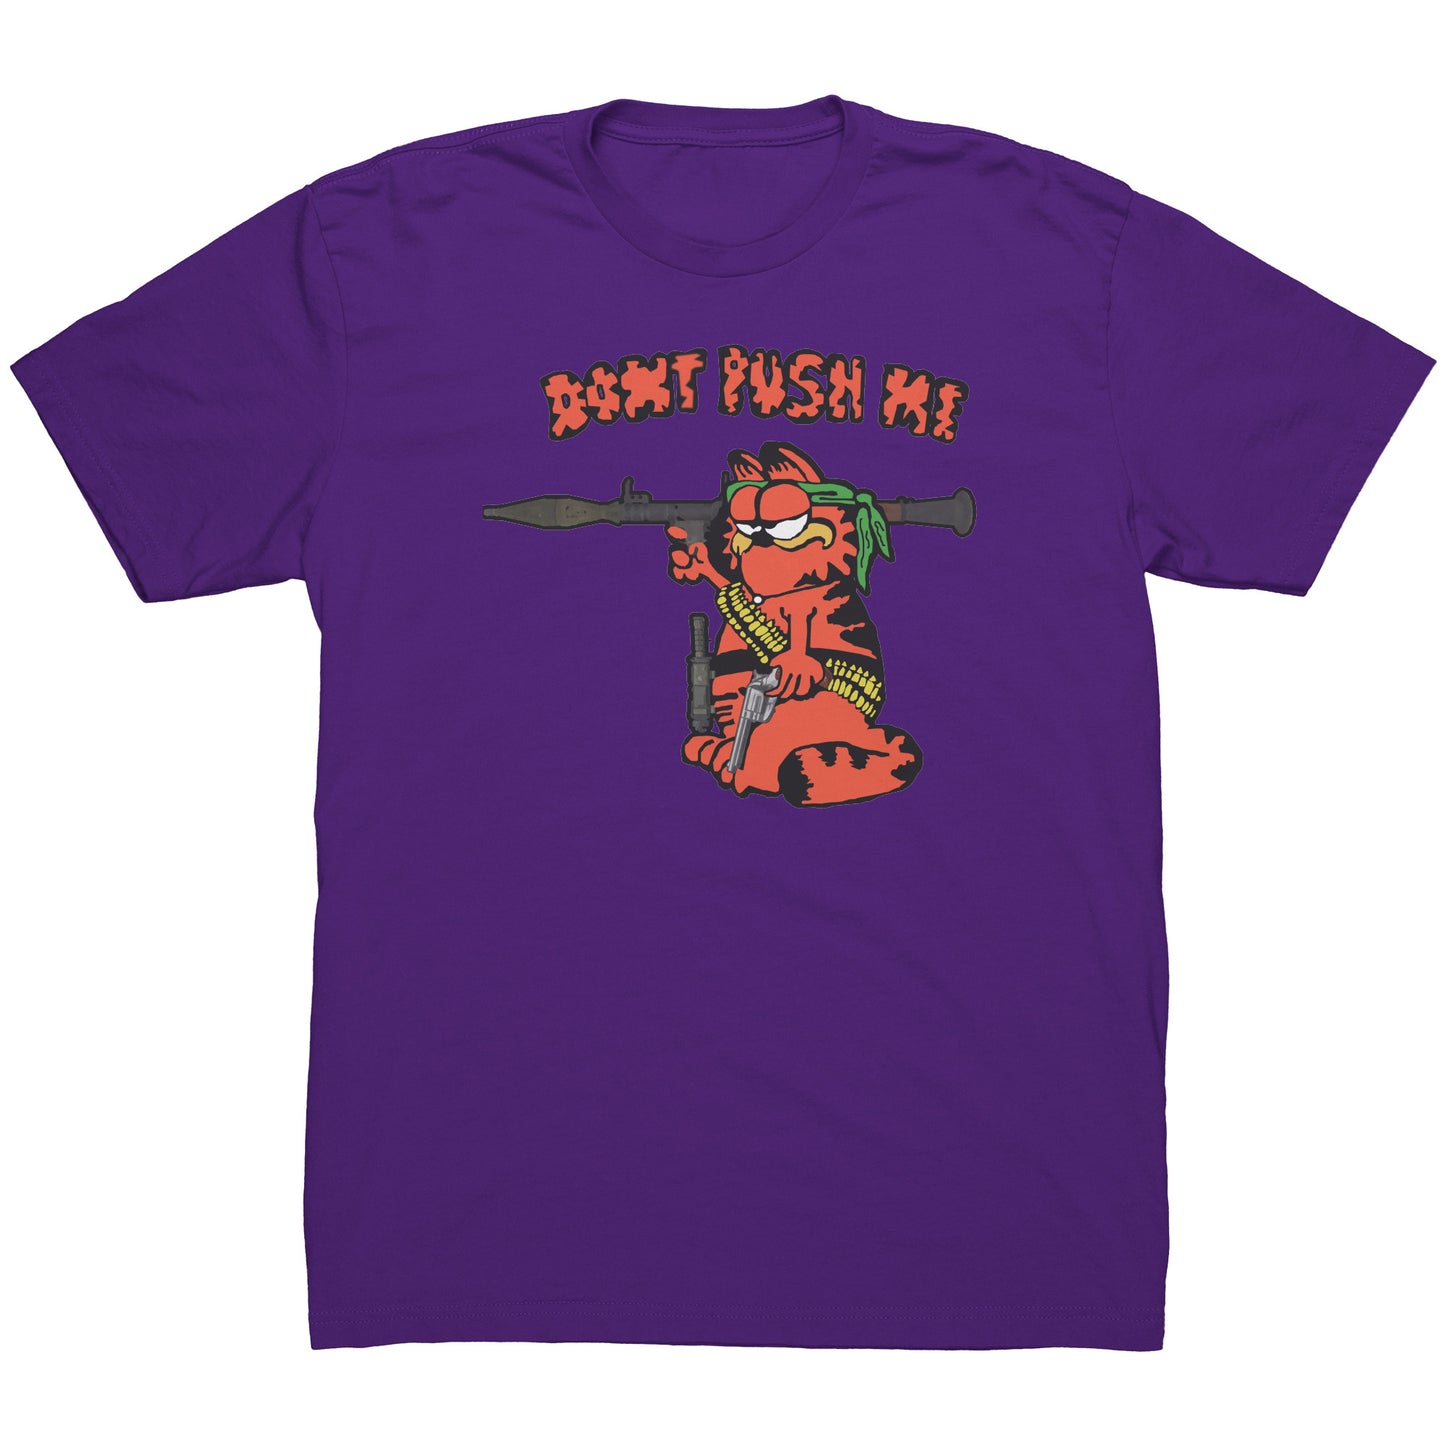 DONT PUSH ME (The Garf Shirt u know this one)